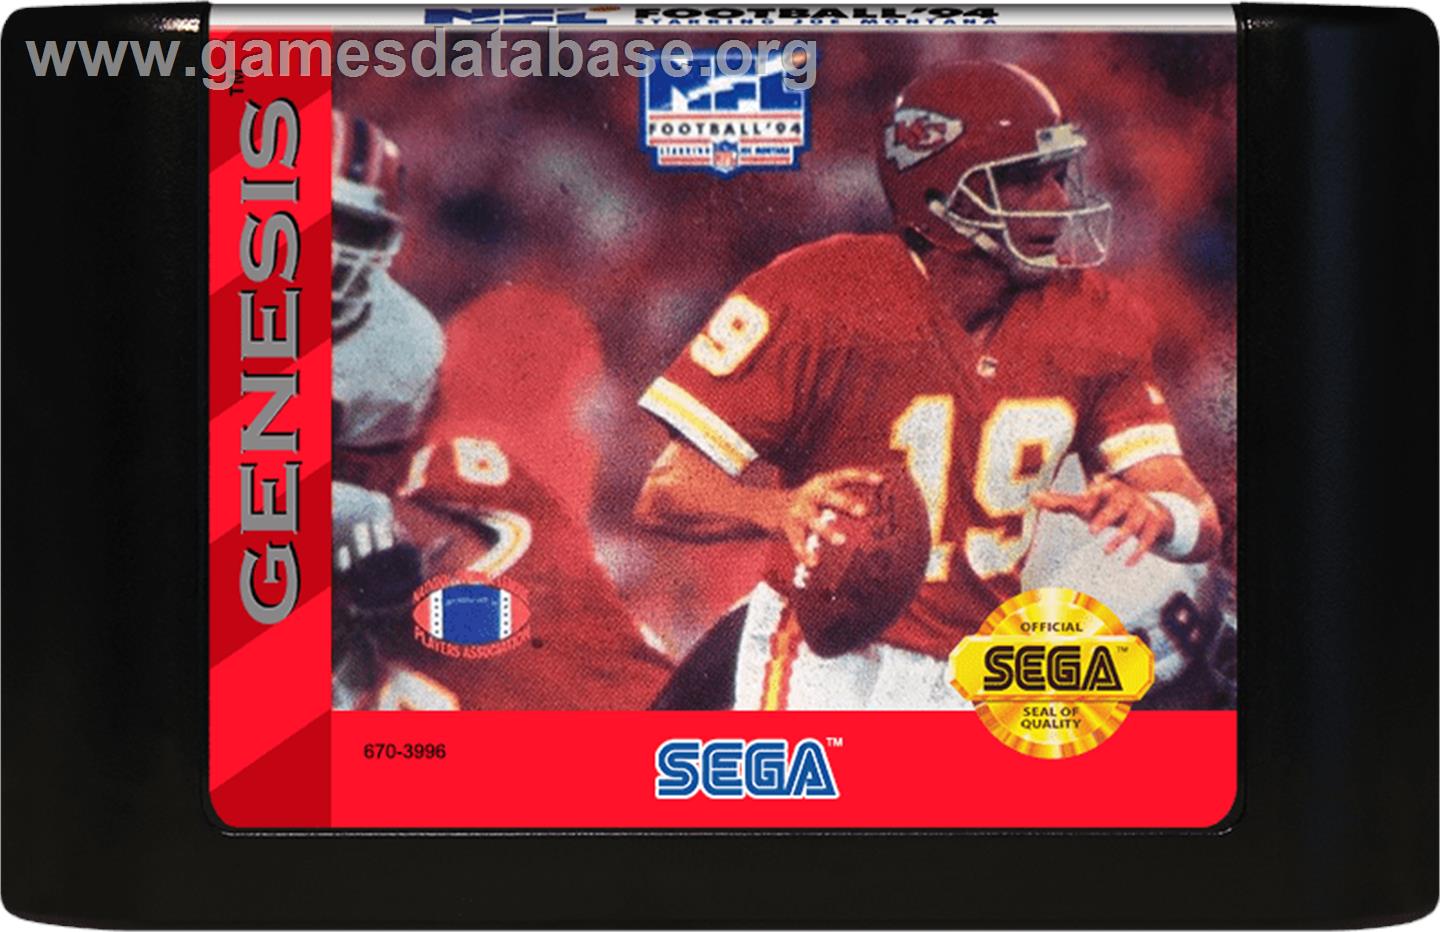 NFL Football '94 Starring Joe Montana - Sega Genesis - Artwork - Cartridge